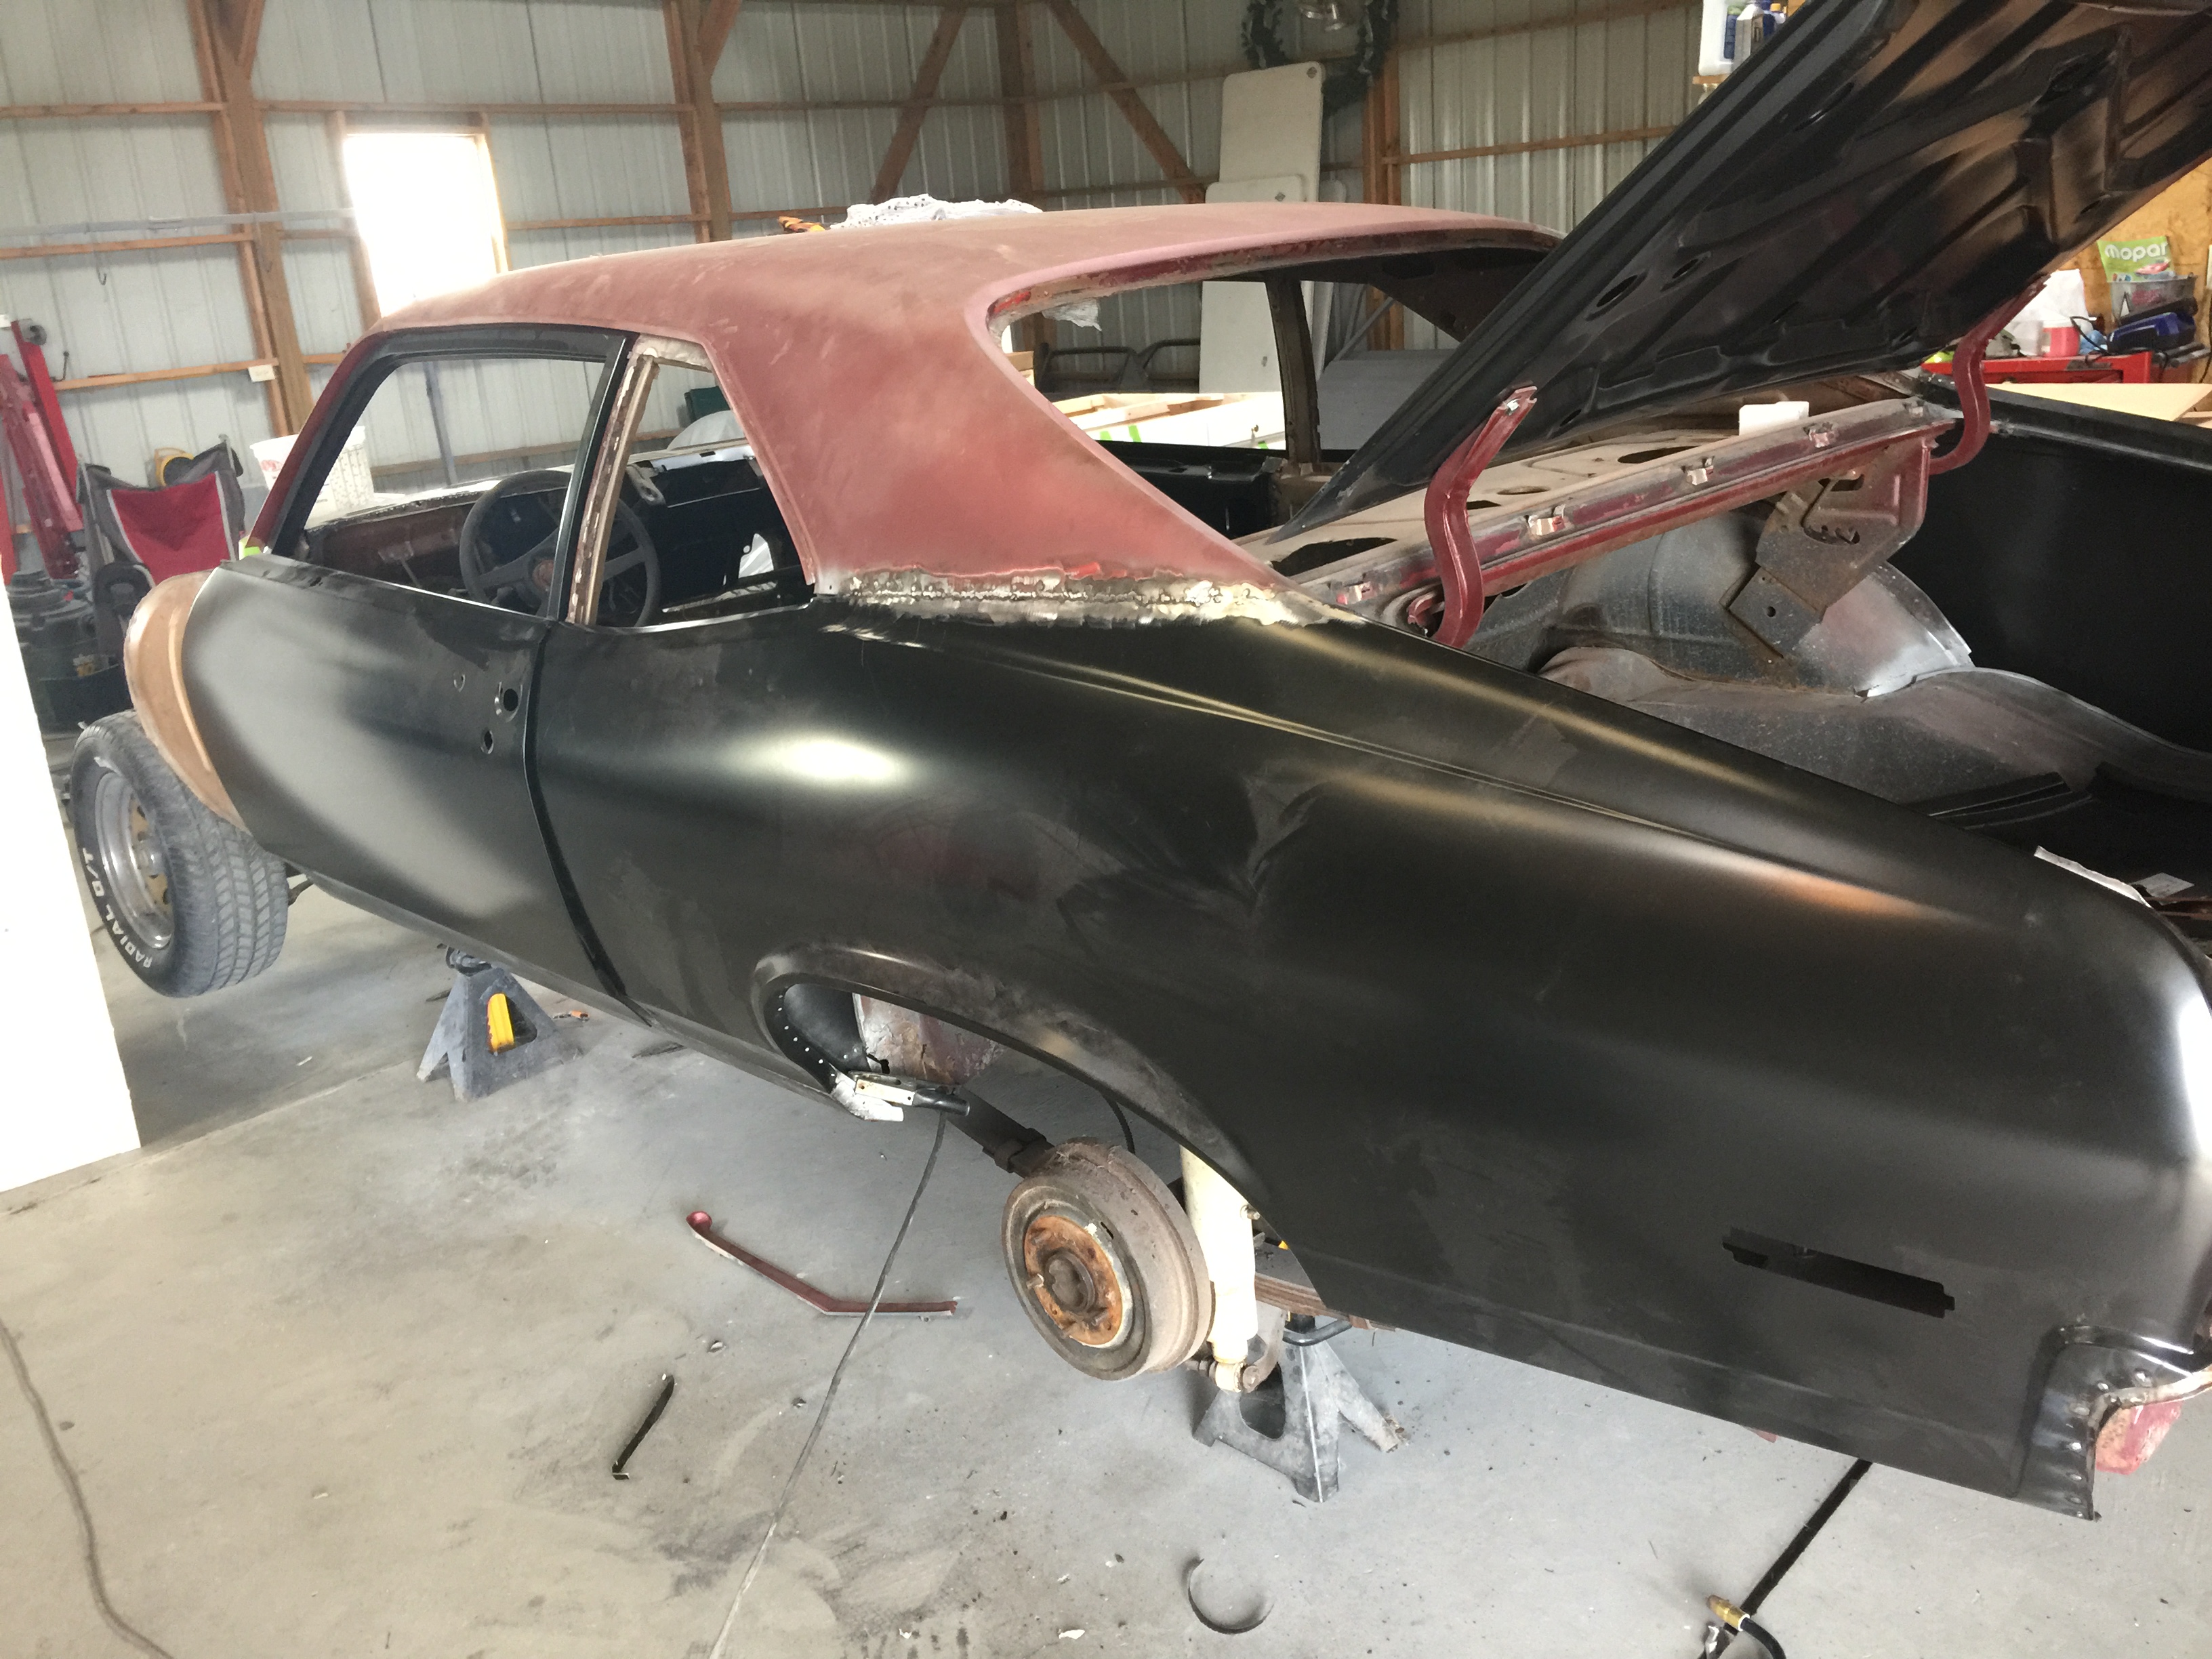 1970 Nova, Complete Auto Restoration—An Old Friend